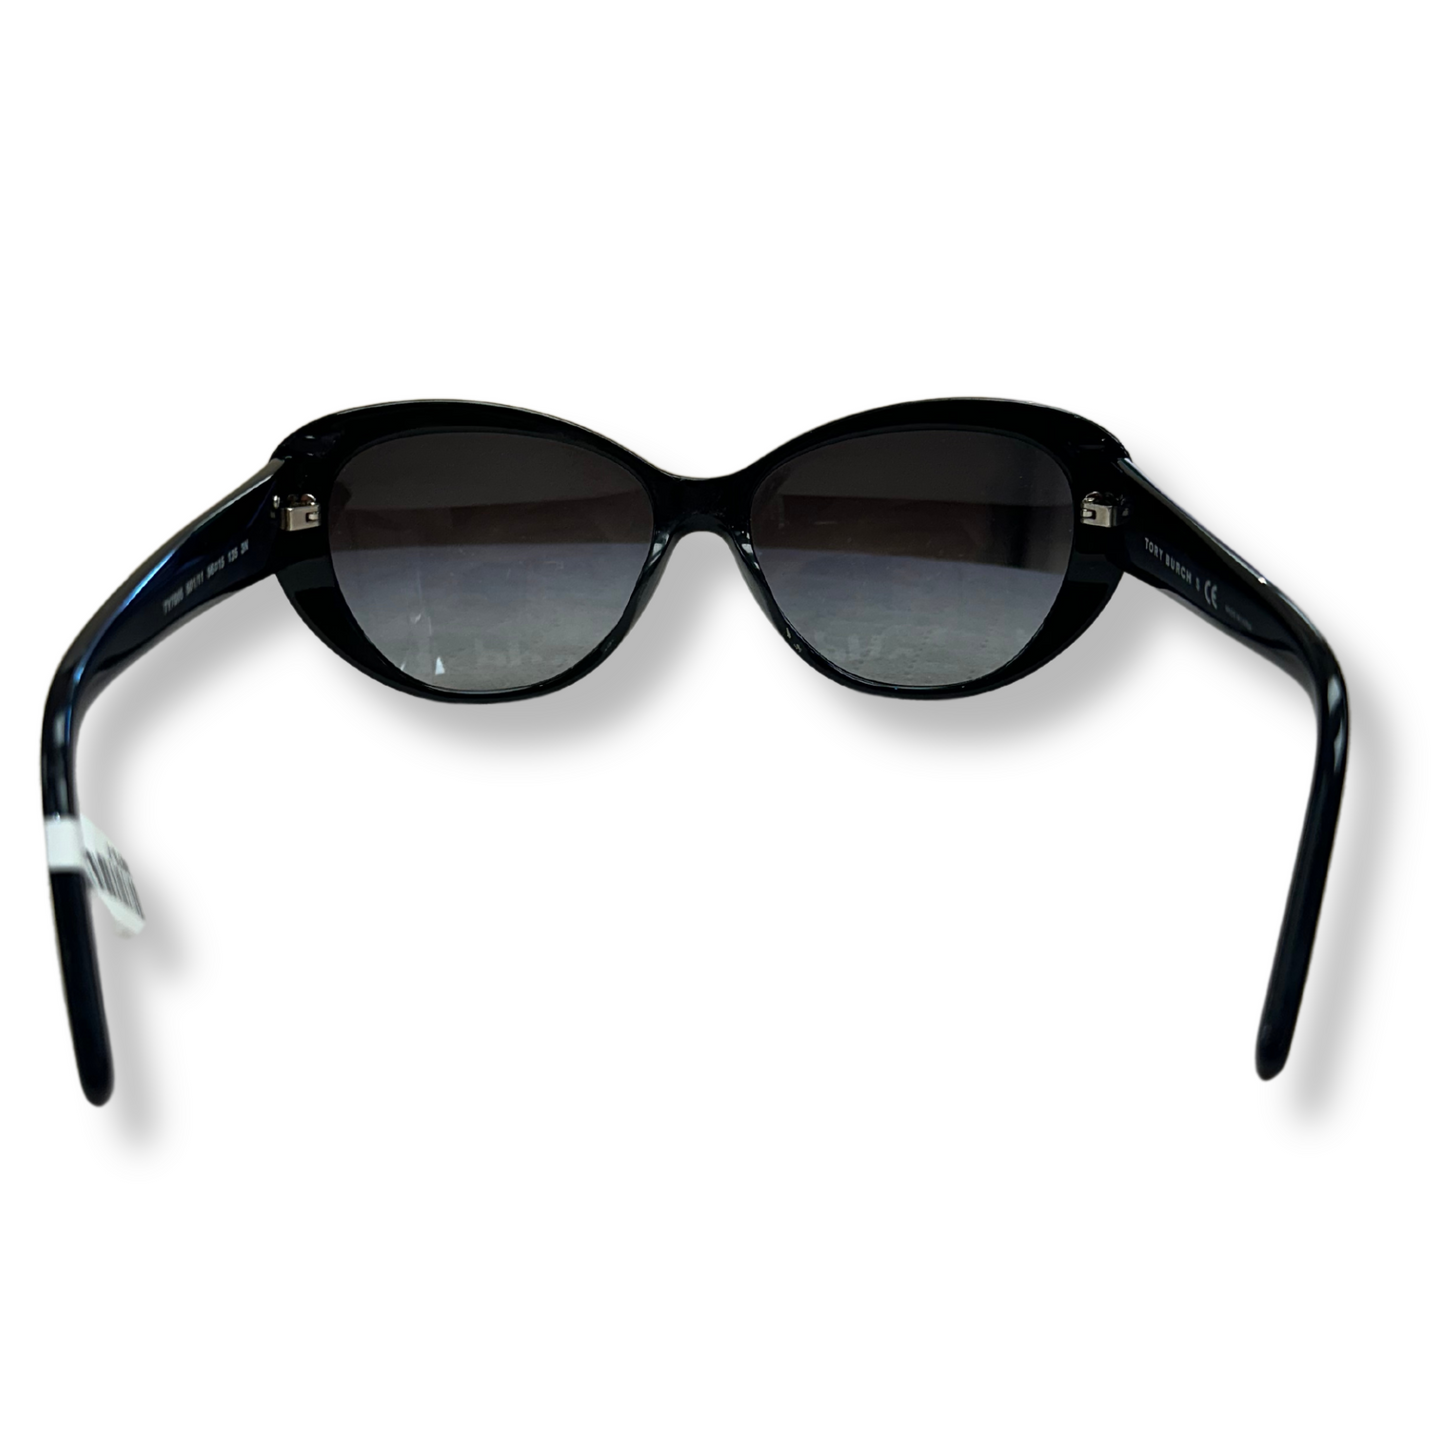 TORY BURCH Black Round Sunglasses